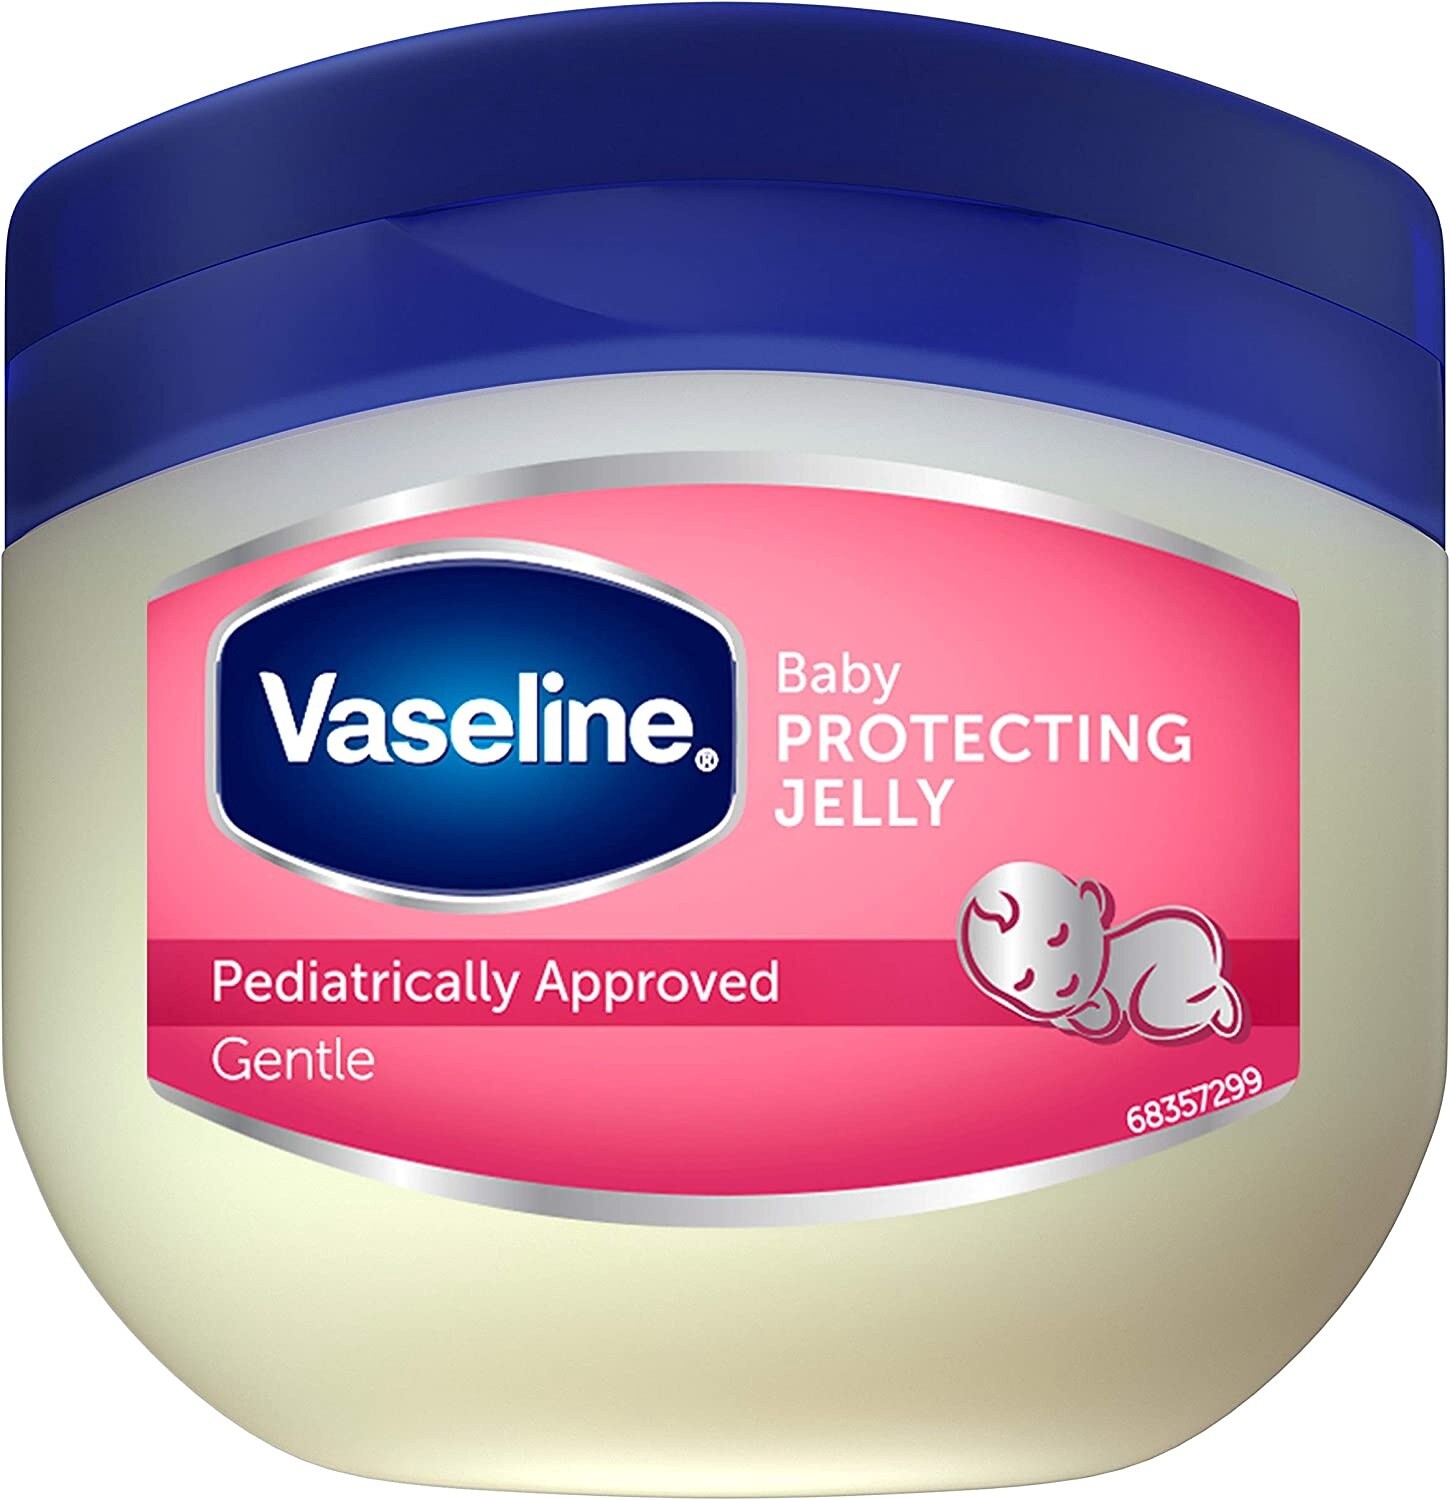 vaseline baby protecting jelly gentle